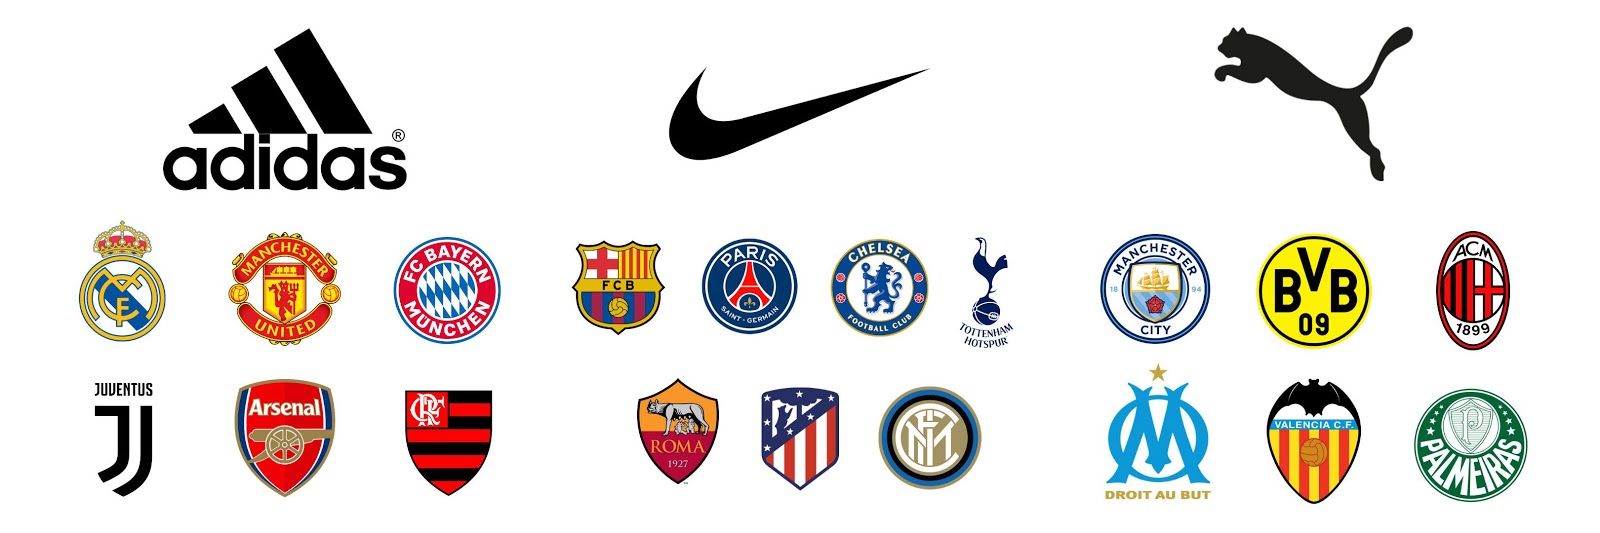 adidas football clubs